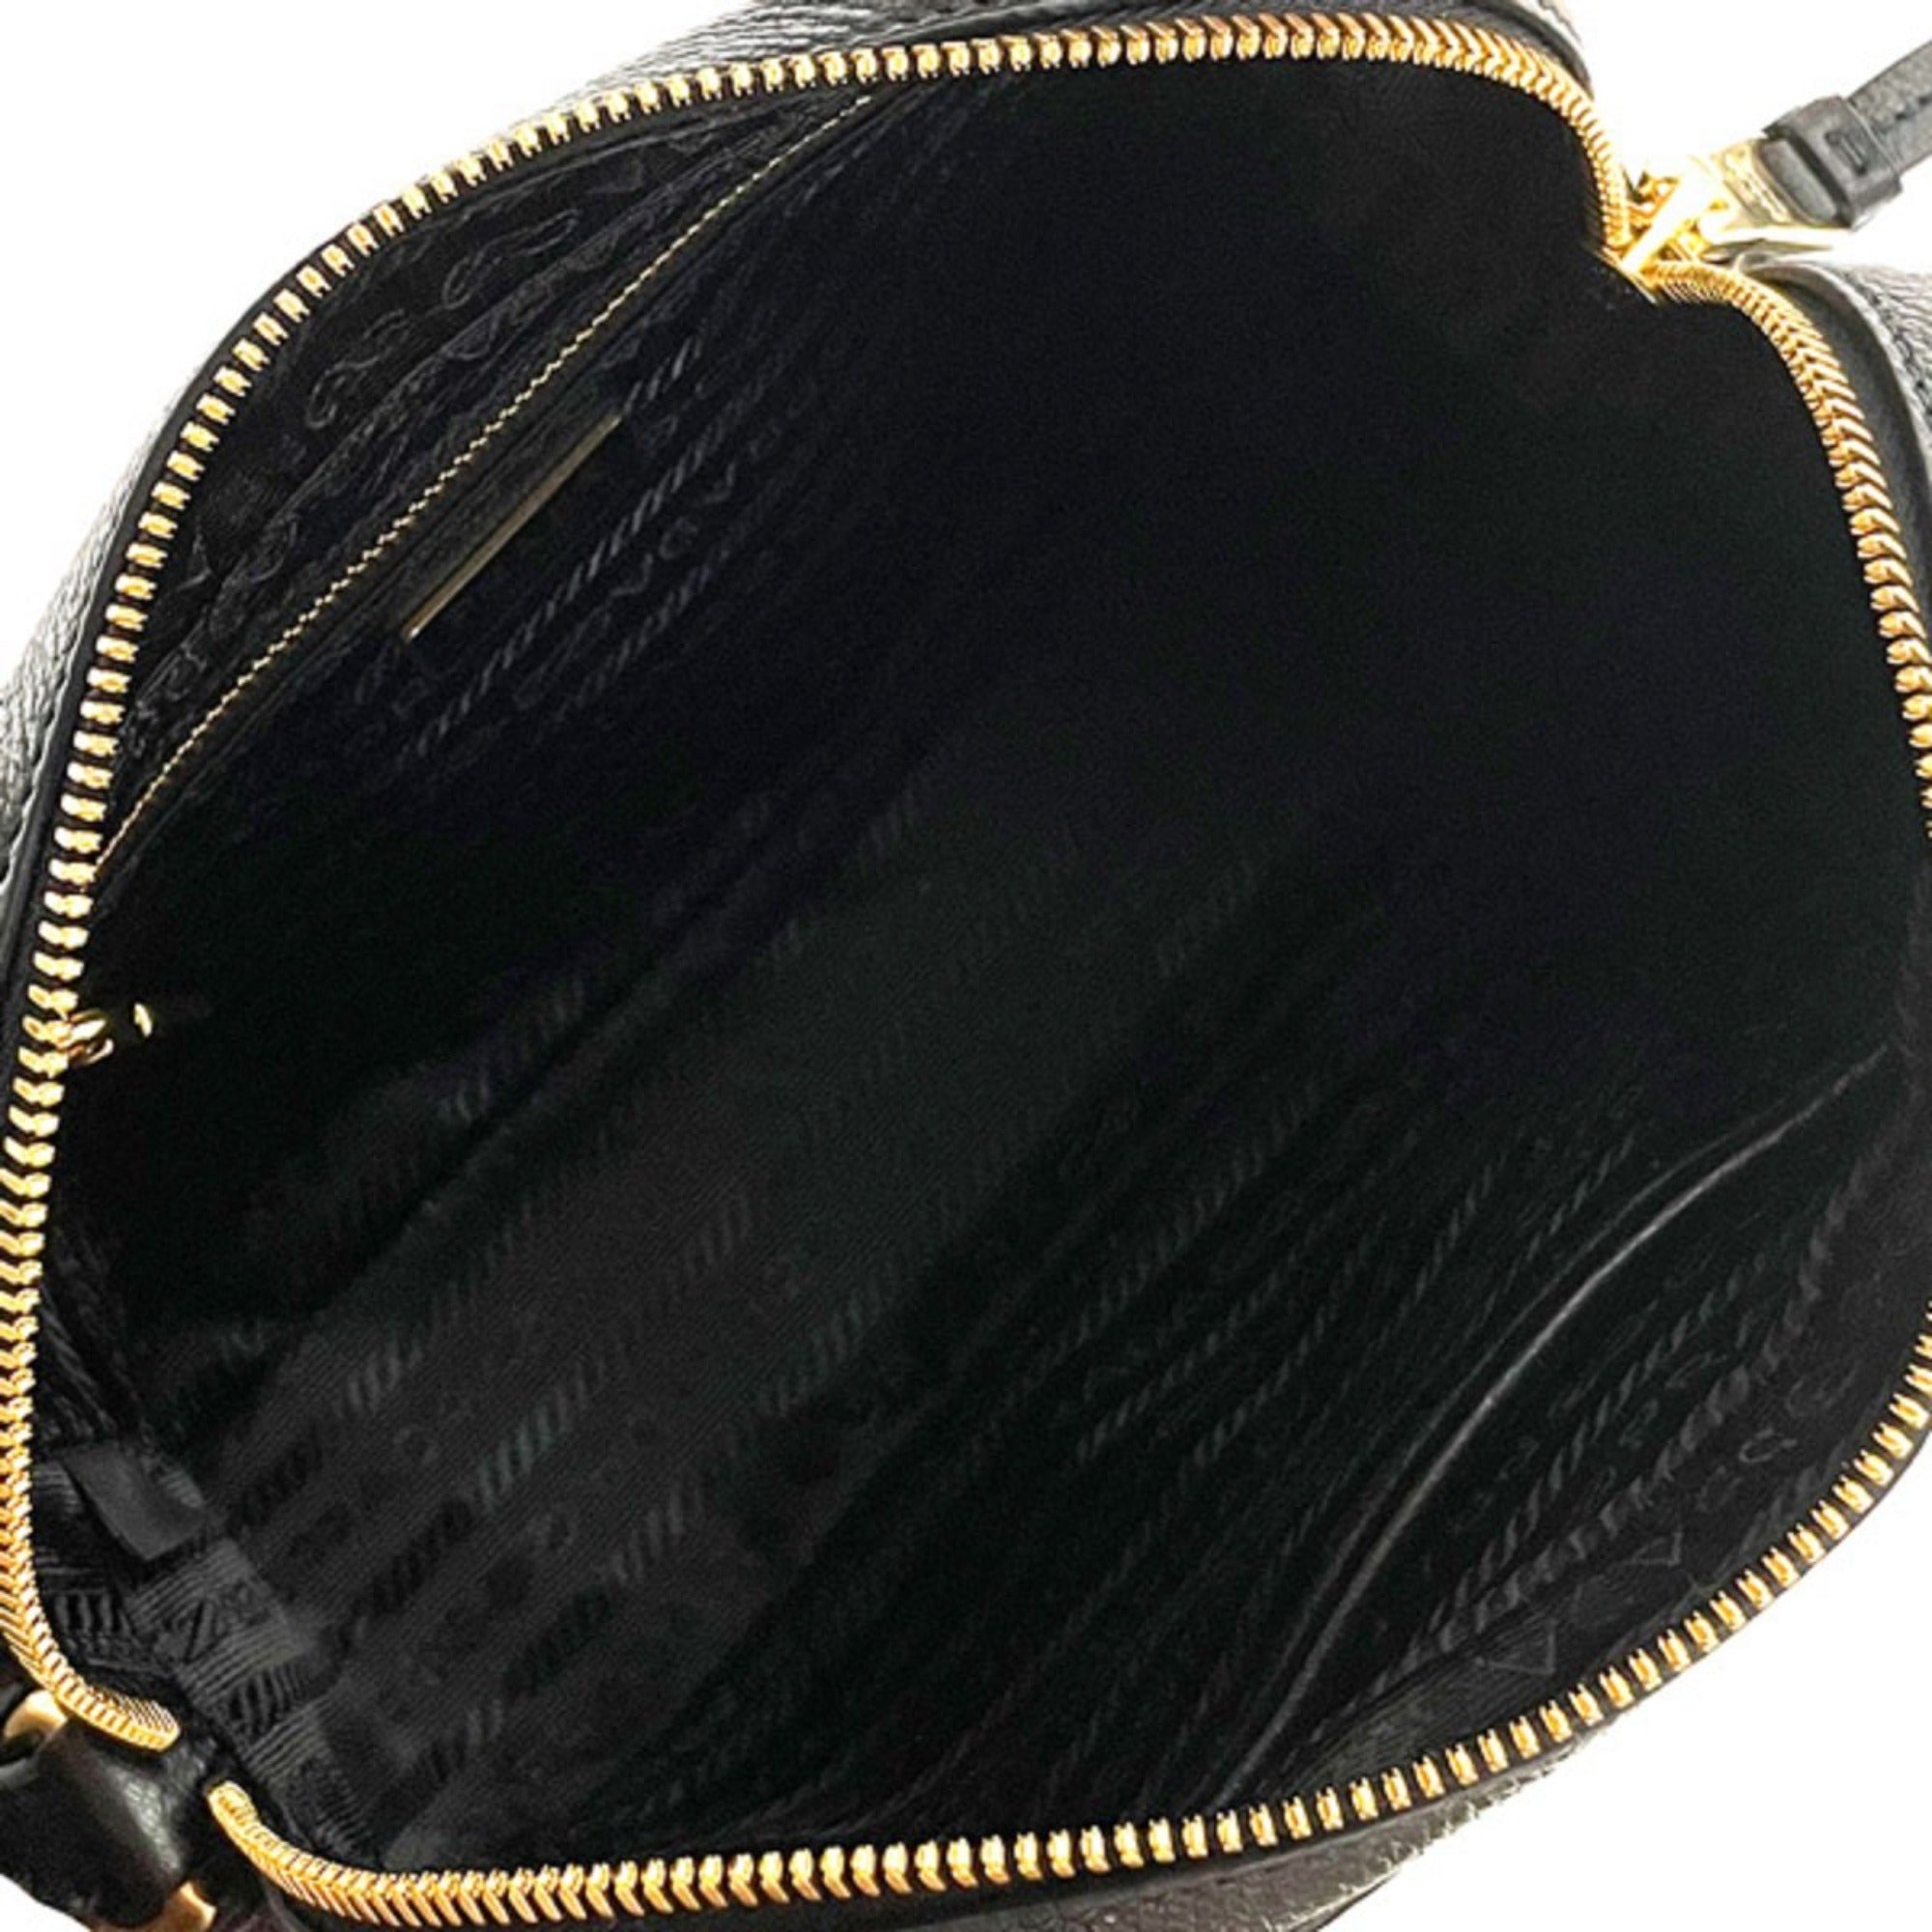 Prada Black Vitello Phenix Leather Shoulder Camera Bag 1BH103 at_Queen_Bee_of_Beverly_Hills